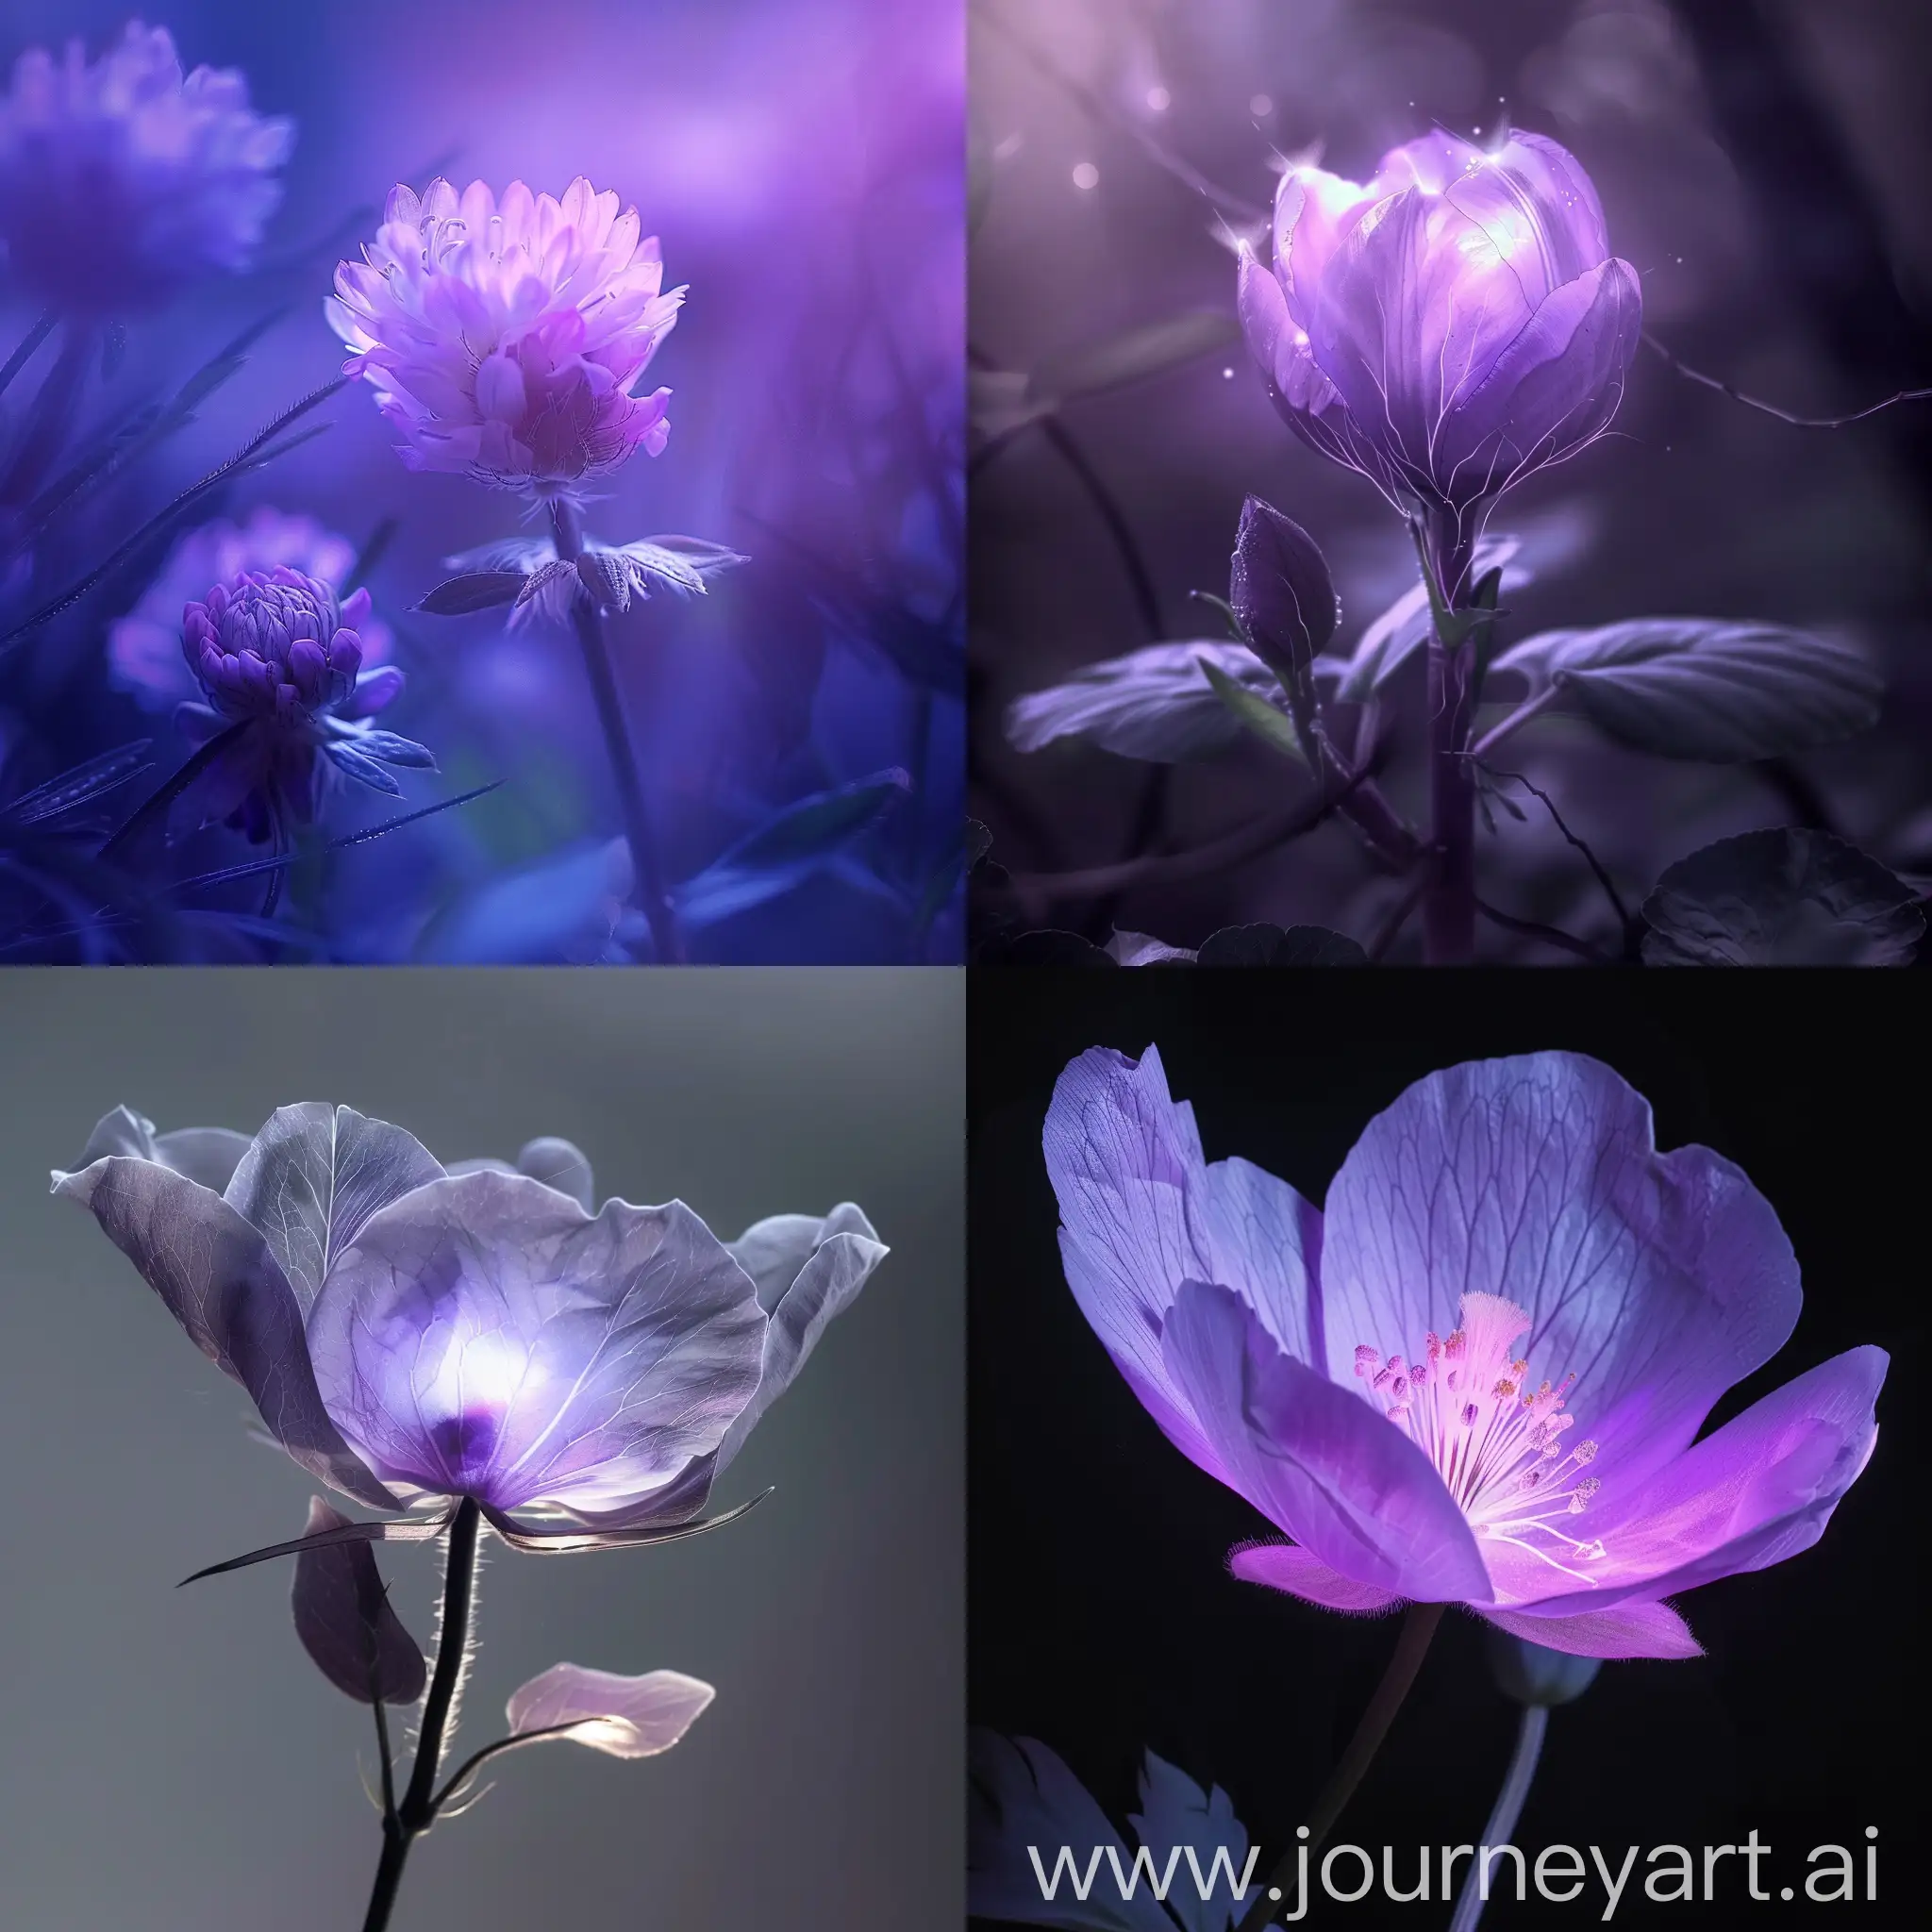 Ethereal-Violet-Flower-Still-Life-Illuminated-by-Soft-Light